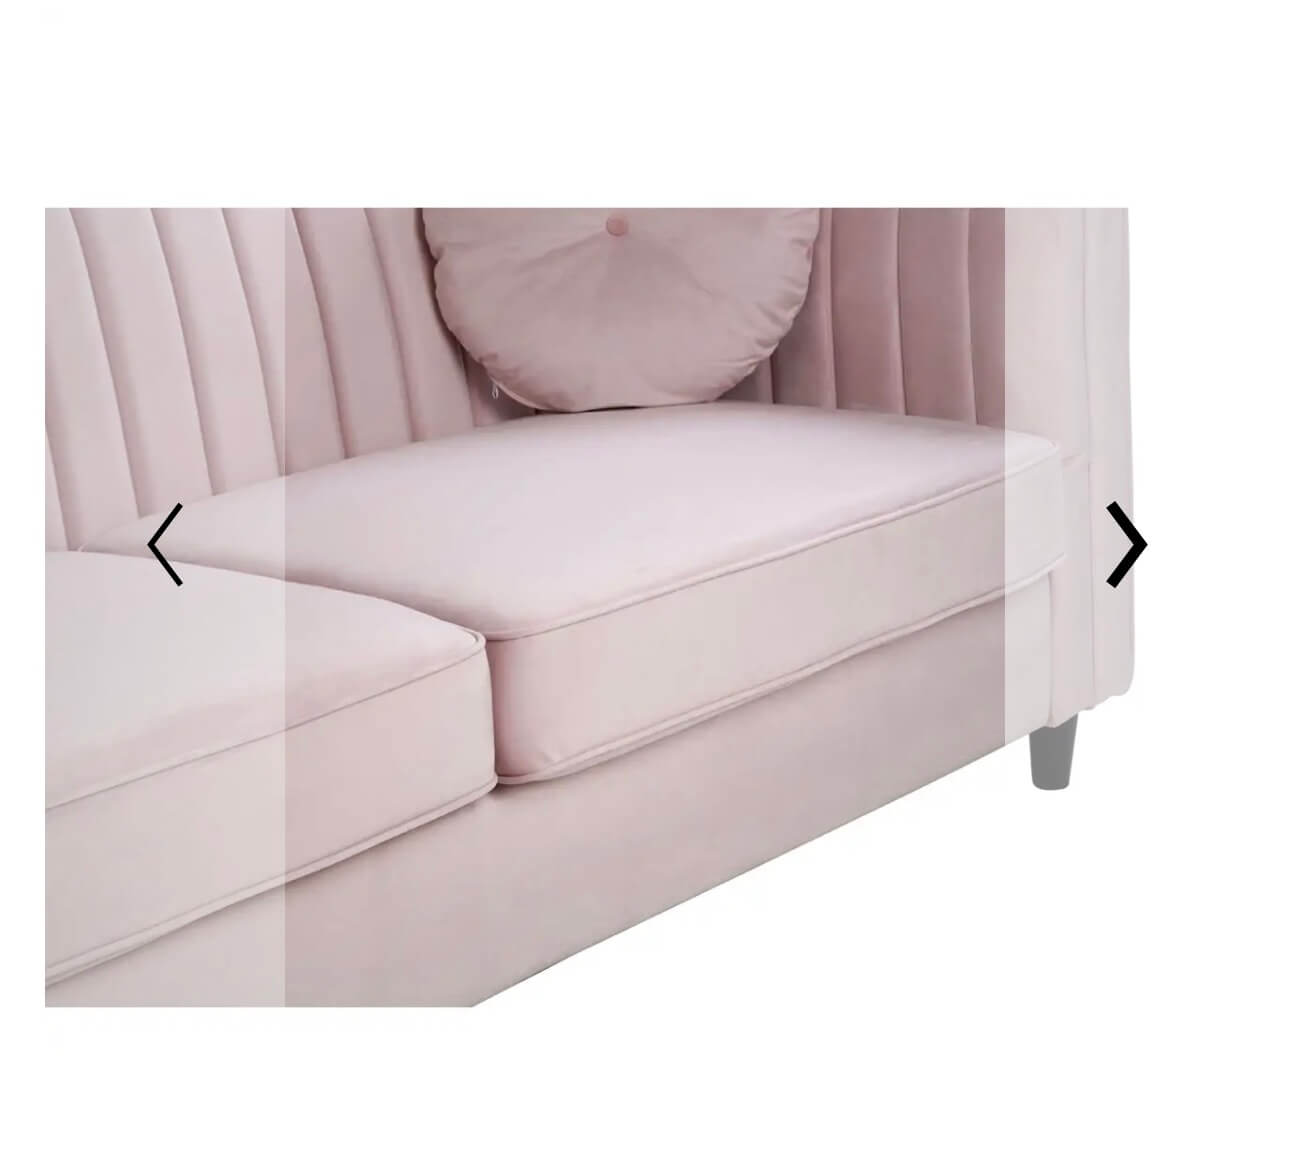 Luxury Pink Velvet Sofa